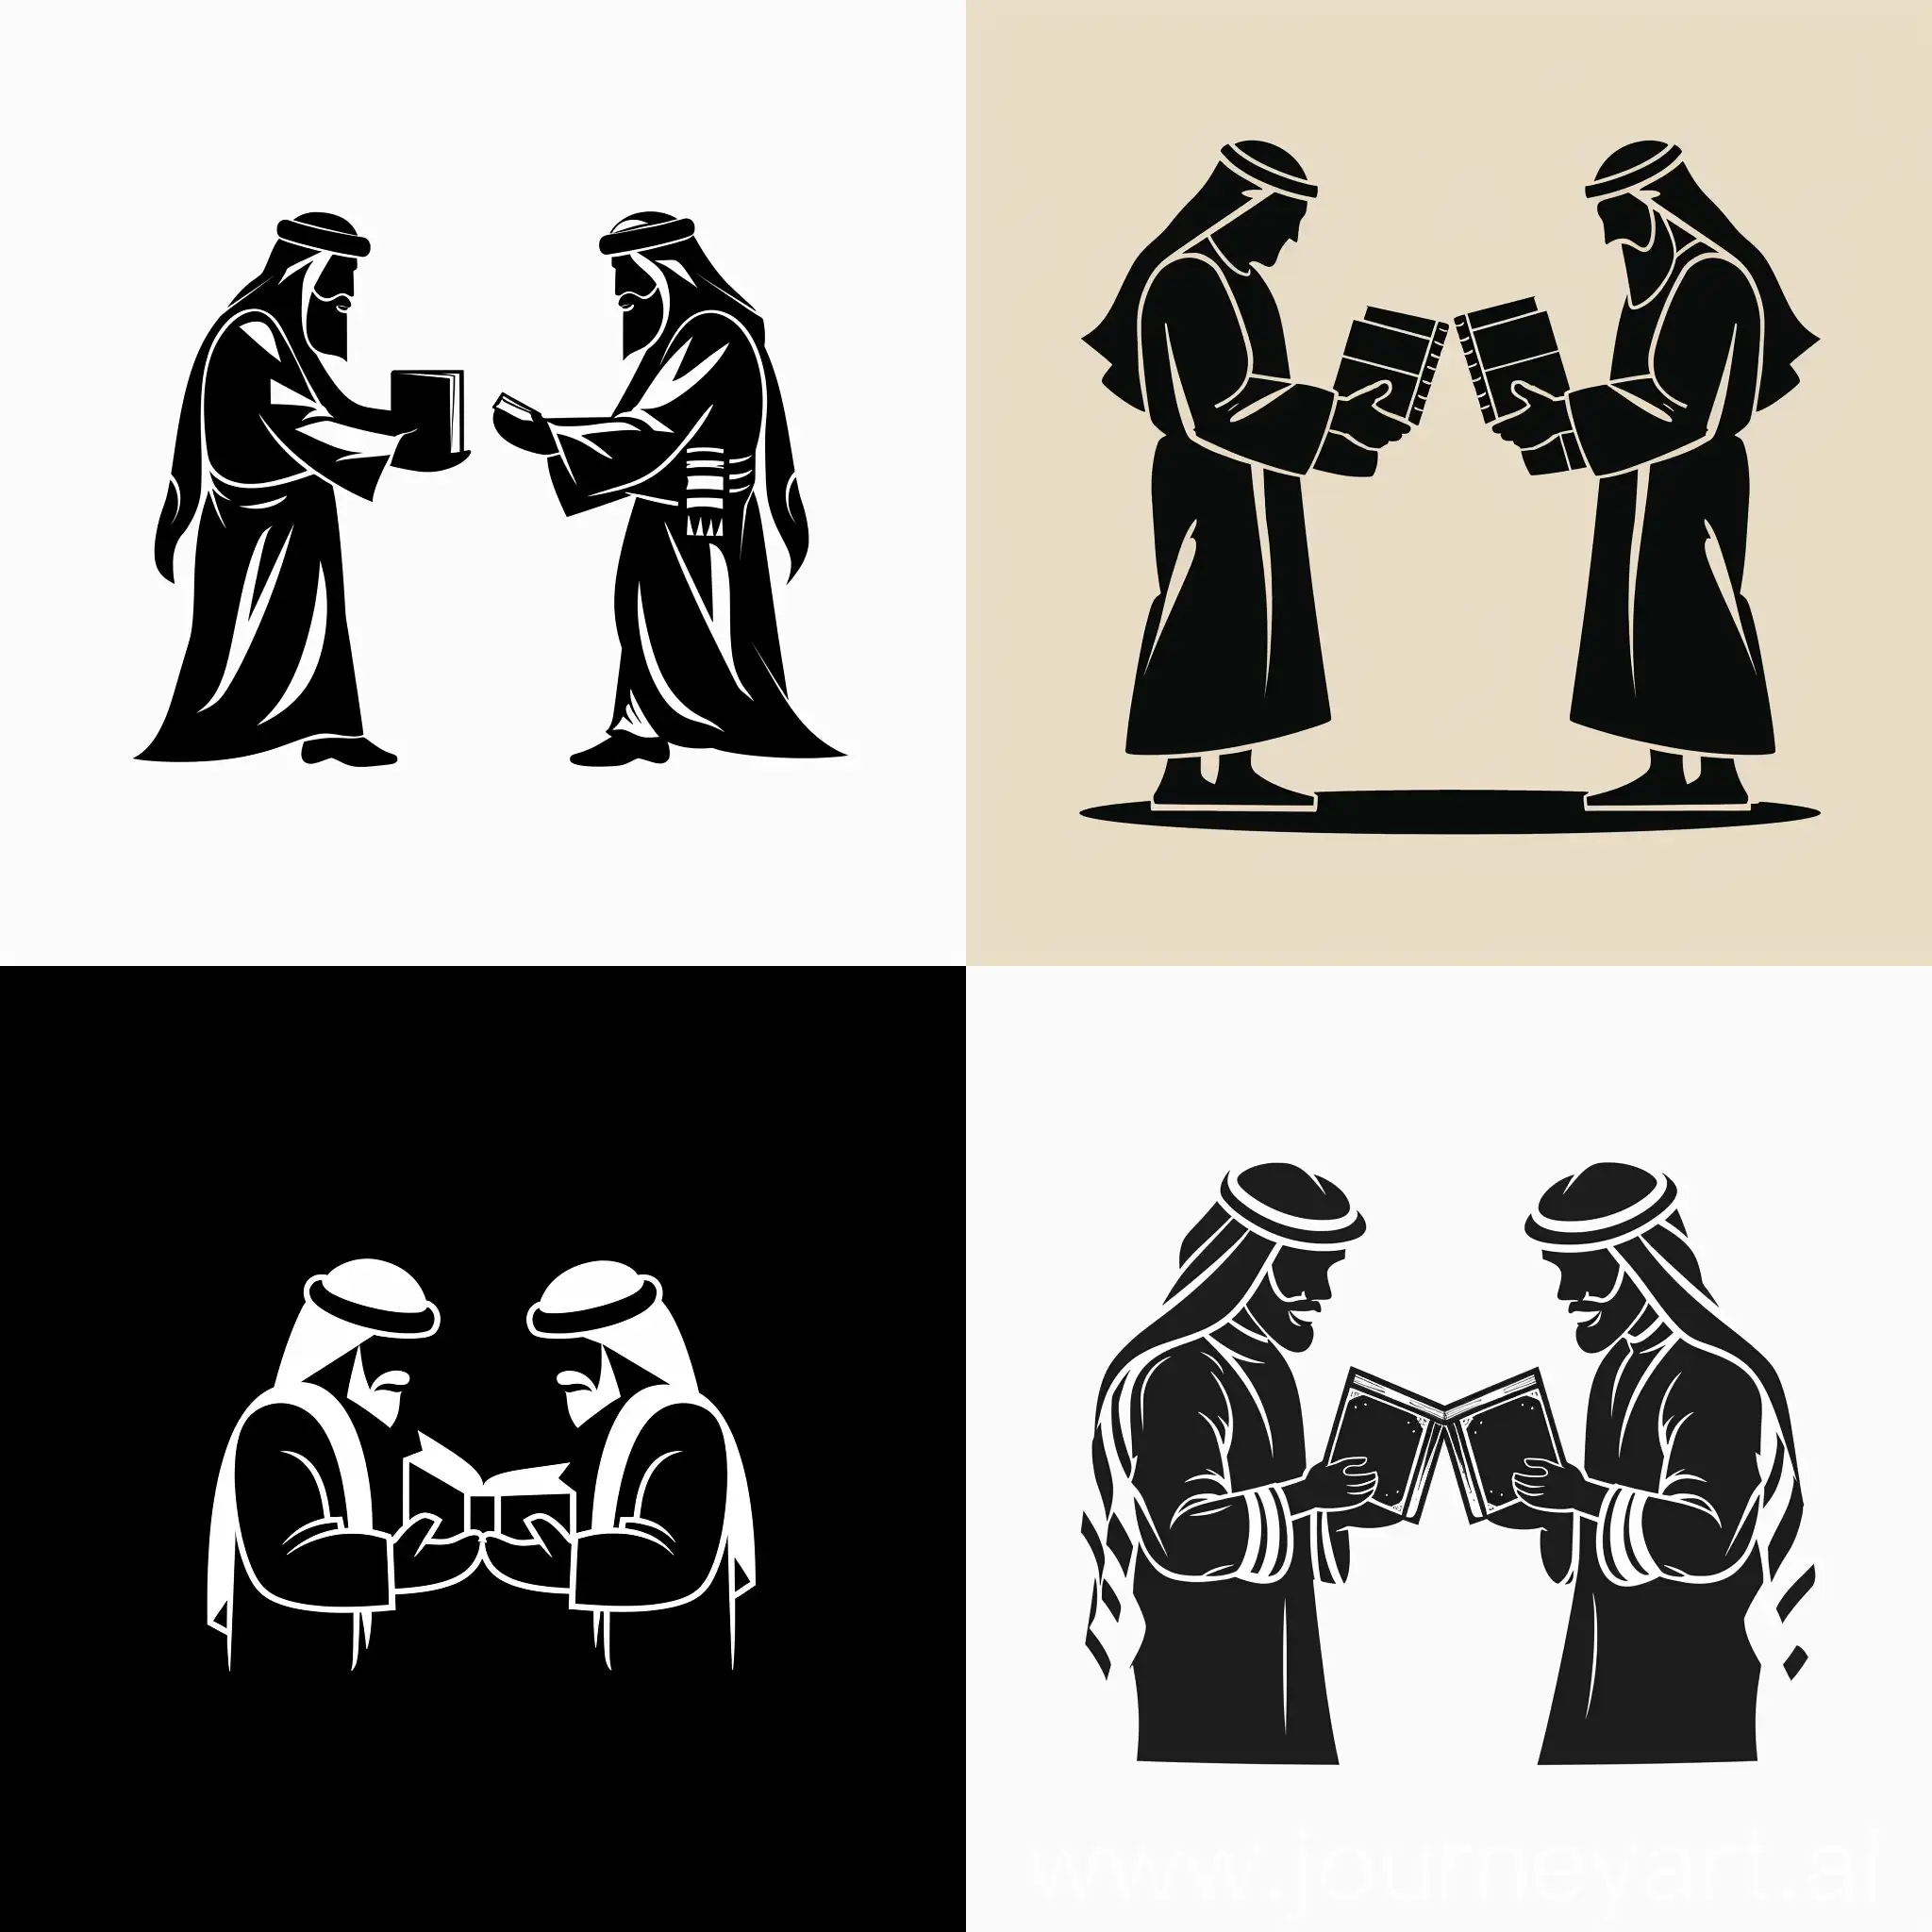 Cultural-Exchange-Black-Silhouette-Bedouin-Men-Sharing-Books